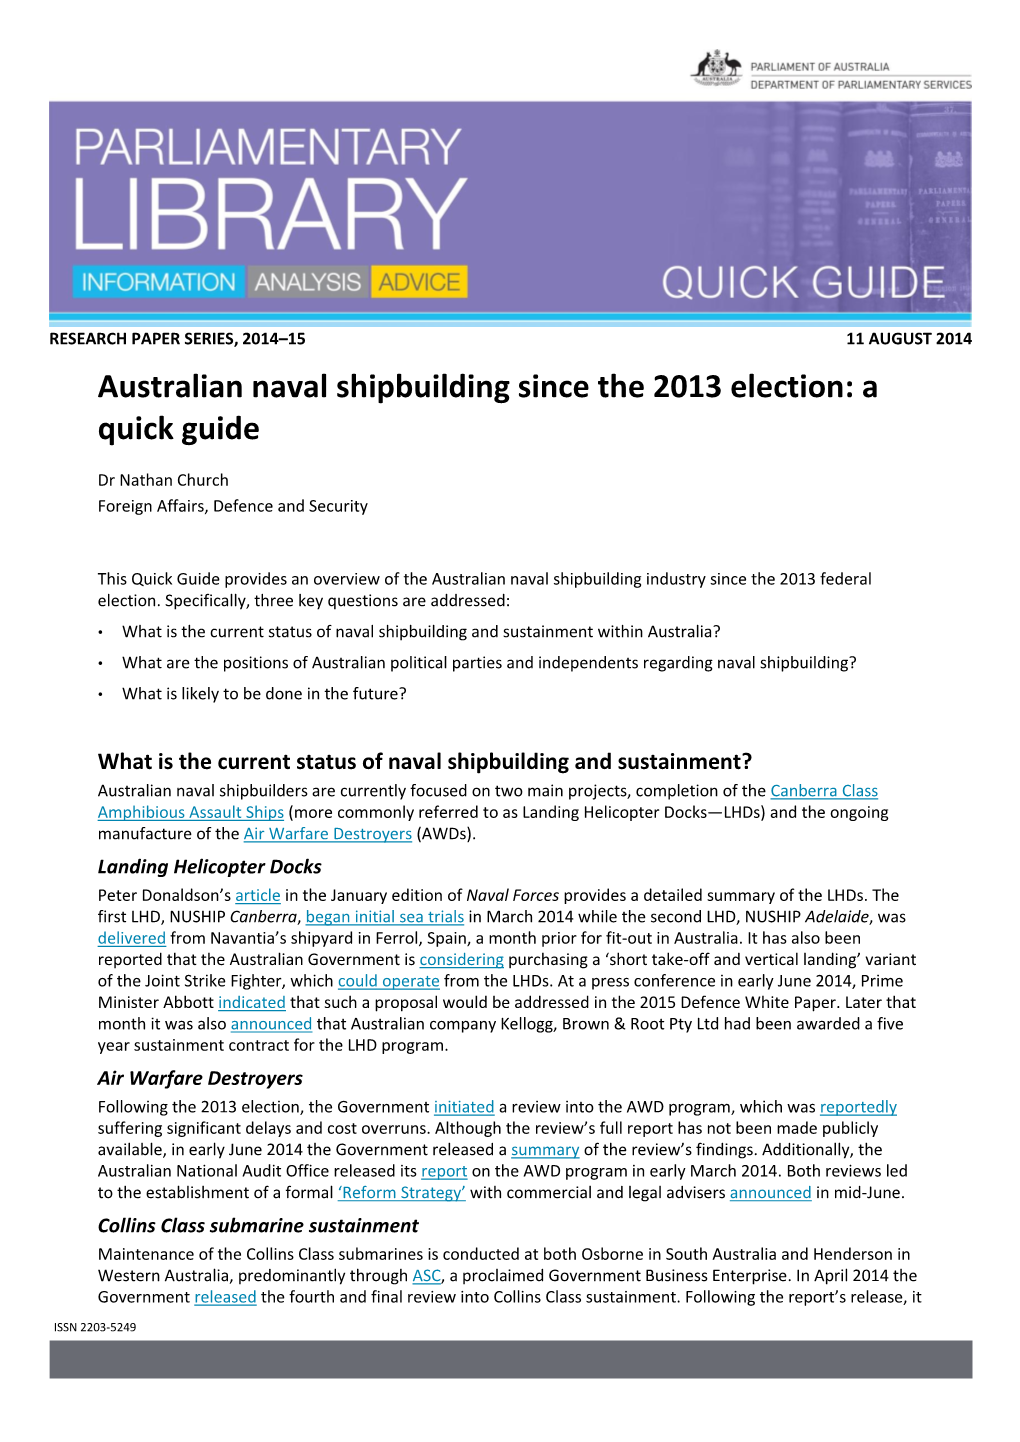 Australian Naval Shipbuilding Since the 2013 Election: a Quick Guide